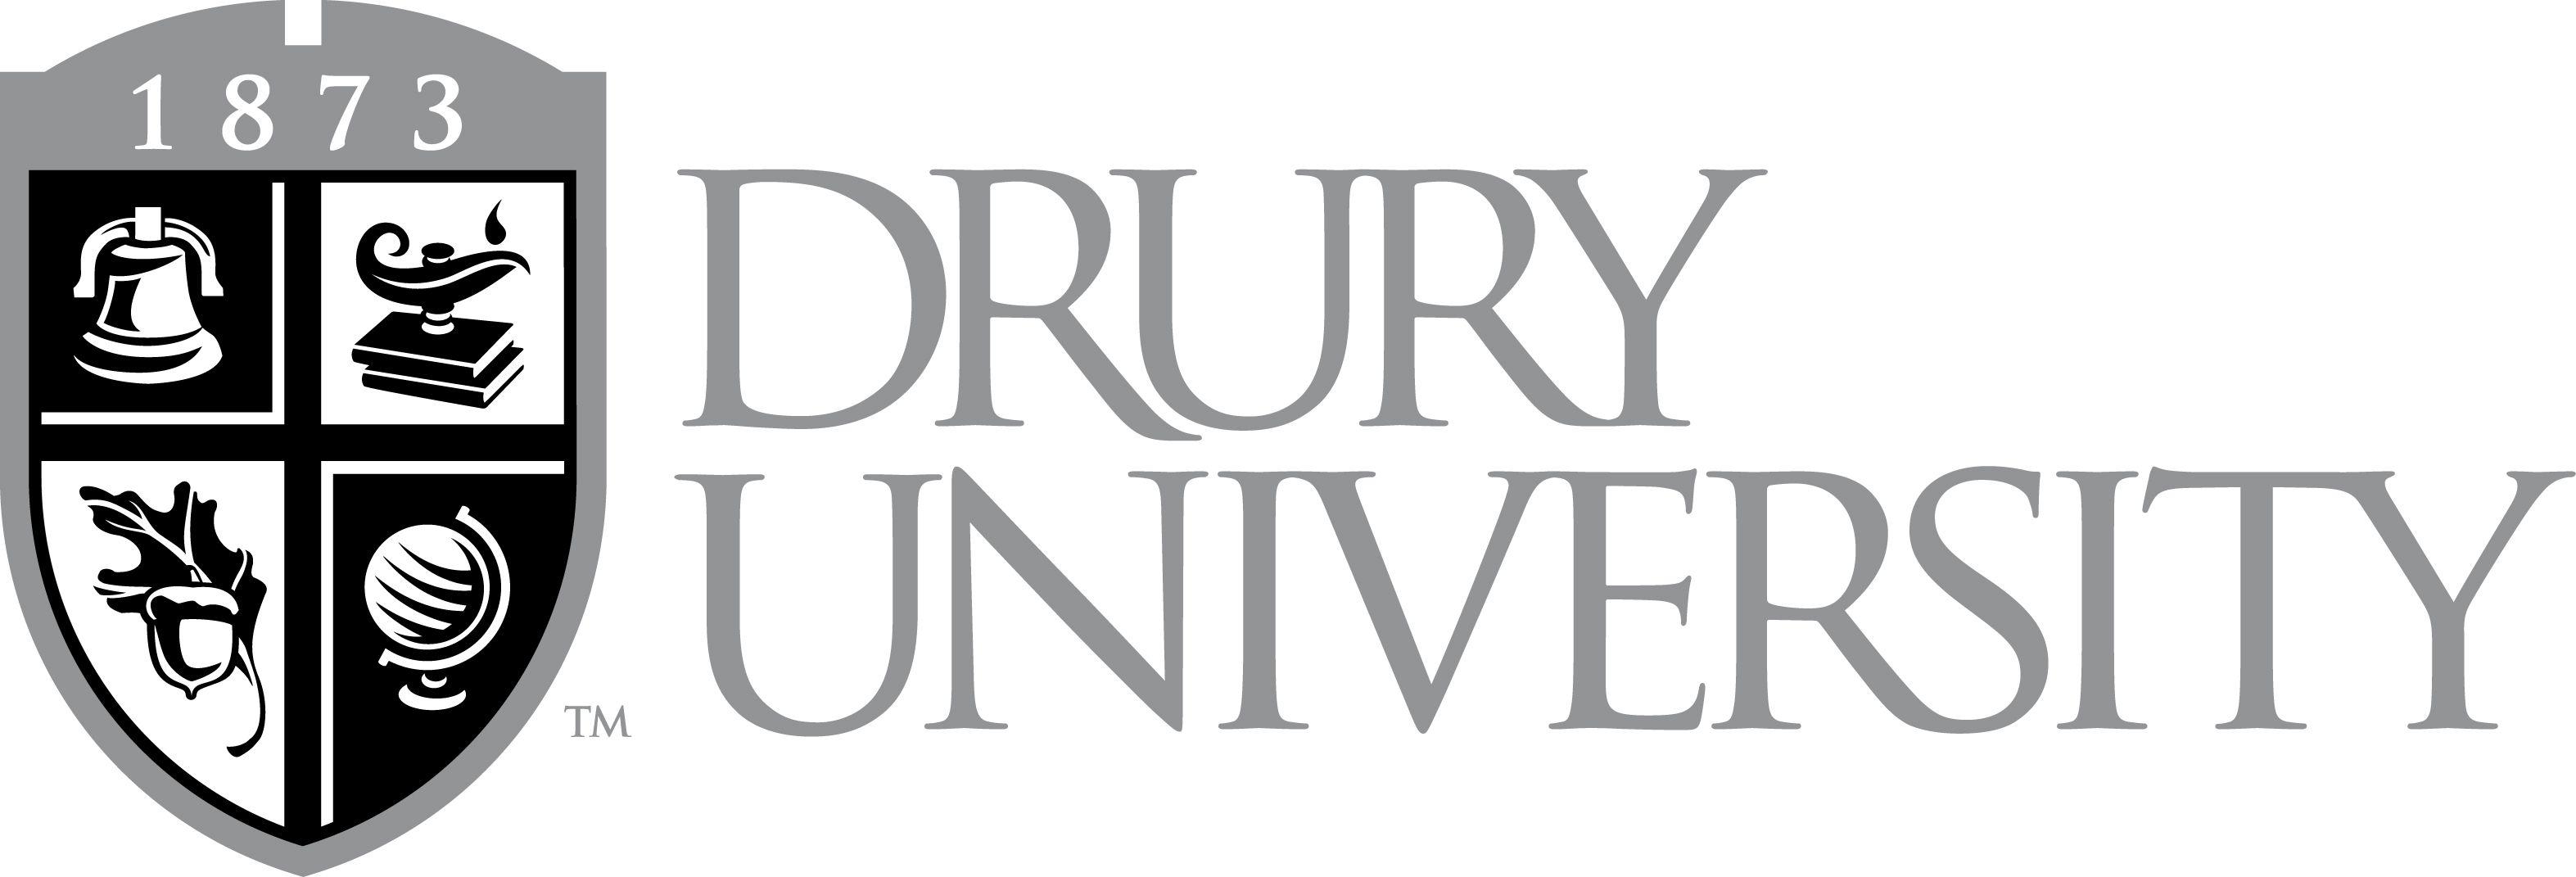 Gray and Black Logo - Drury University: Drury University Logos